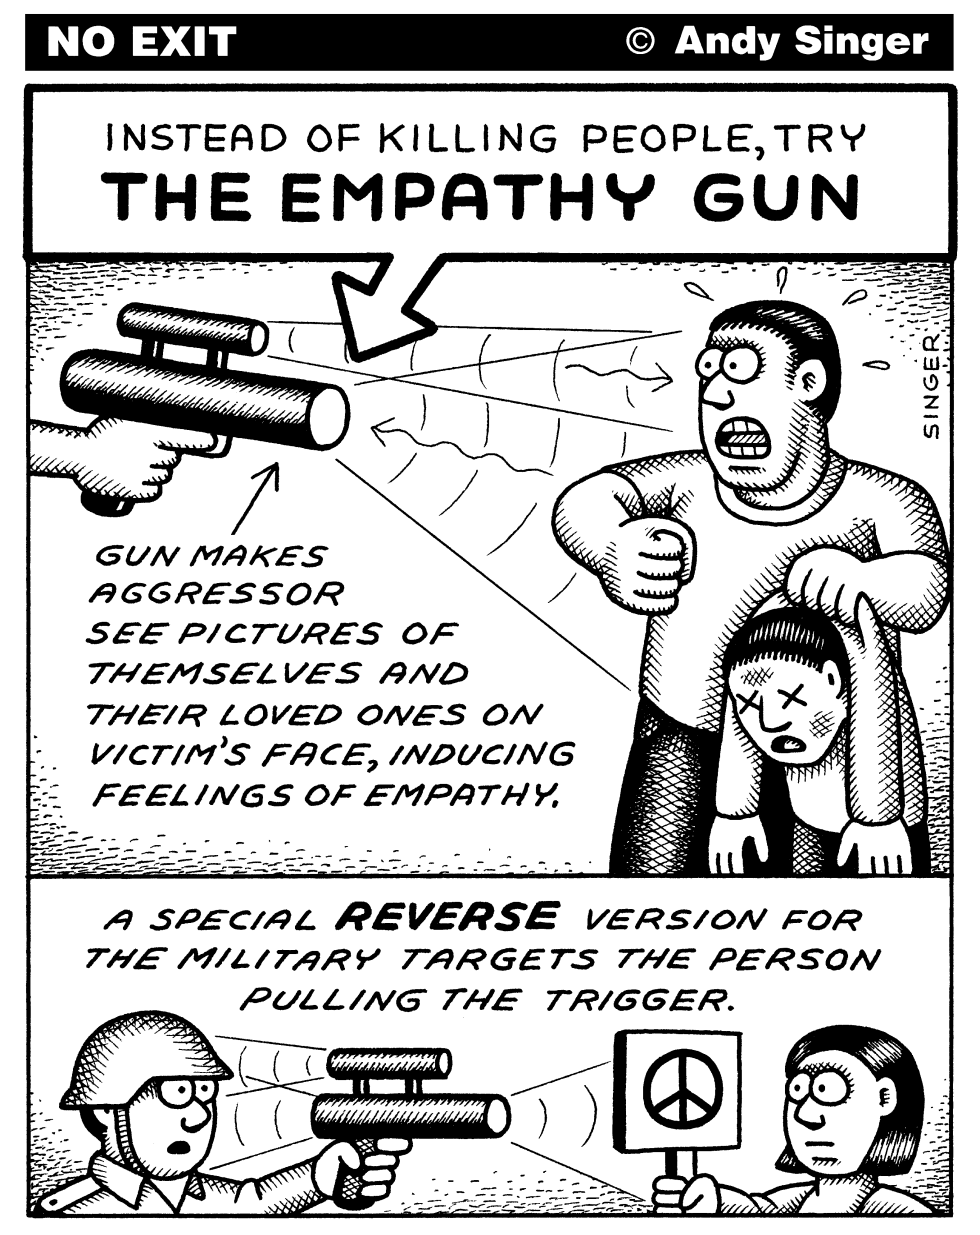 EMPATHY GUN by Andy Singer